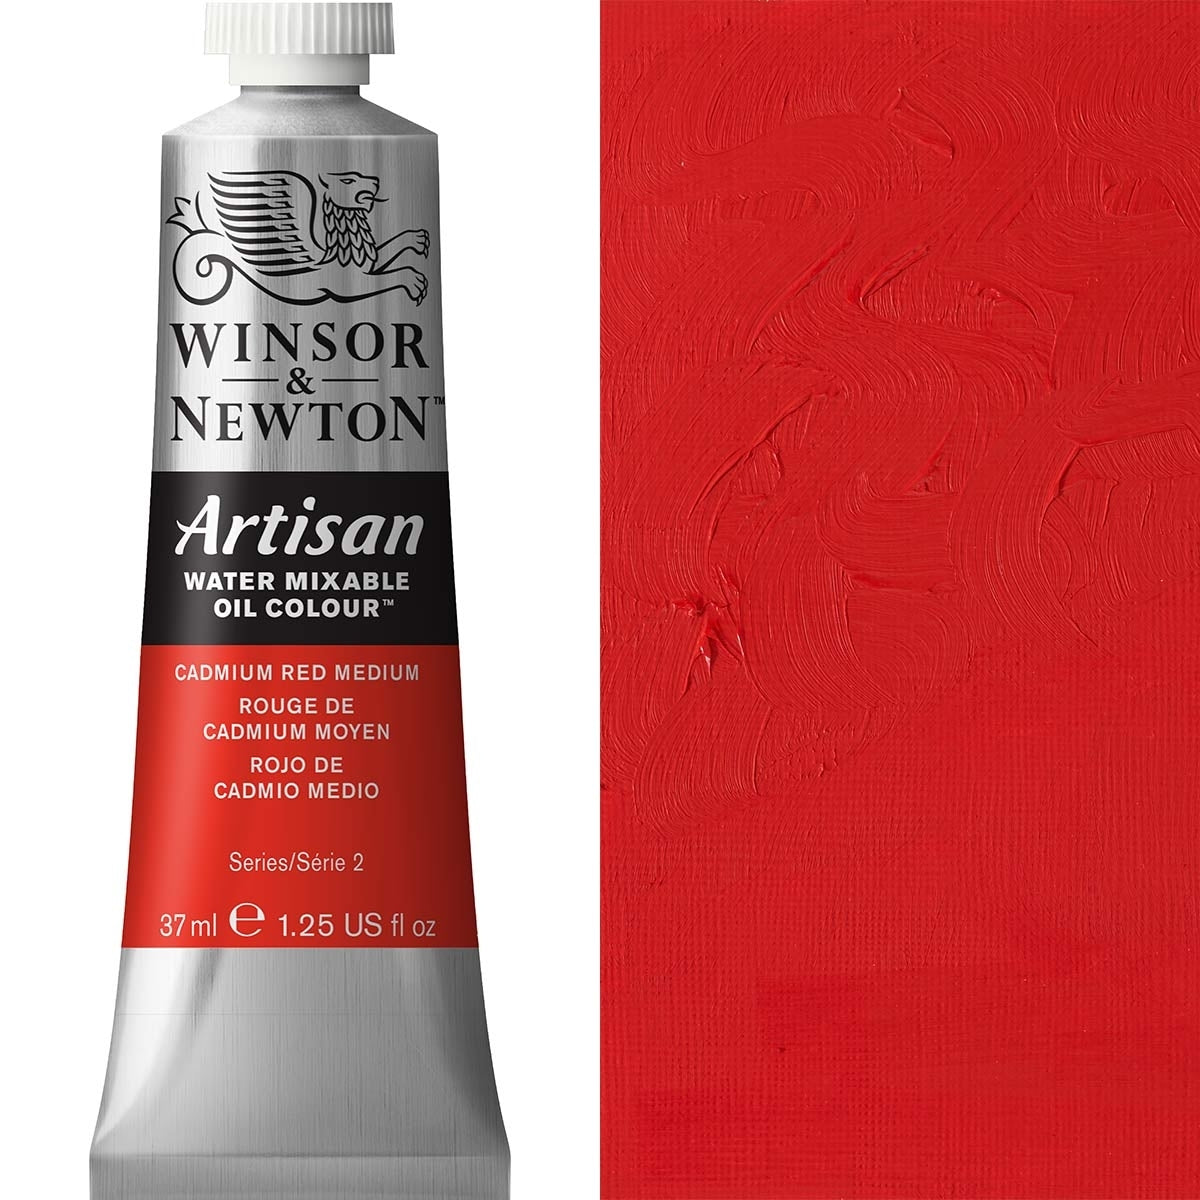 Winsor en Newton - Artisan Oil Color Water Mixable - 37 ml - Cadmium rood medium